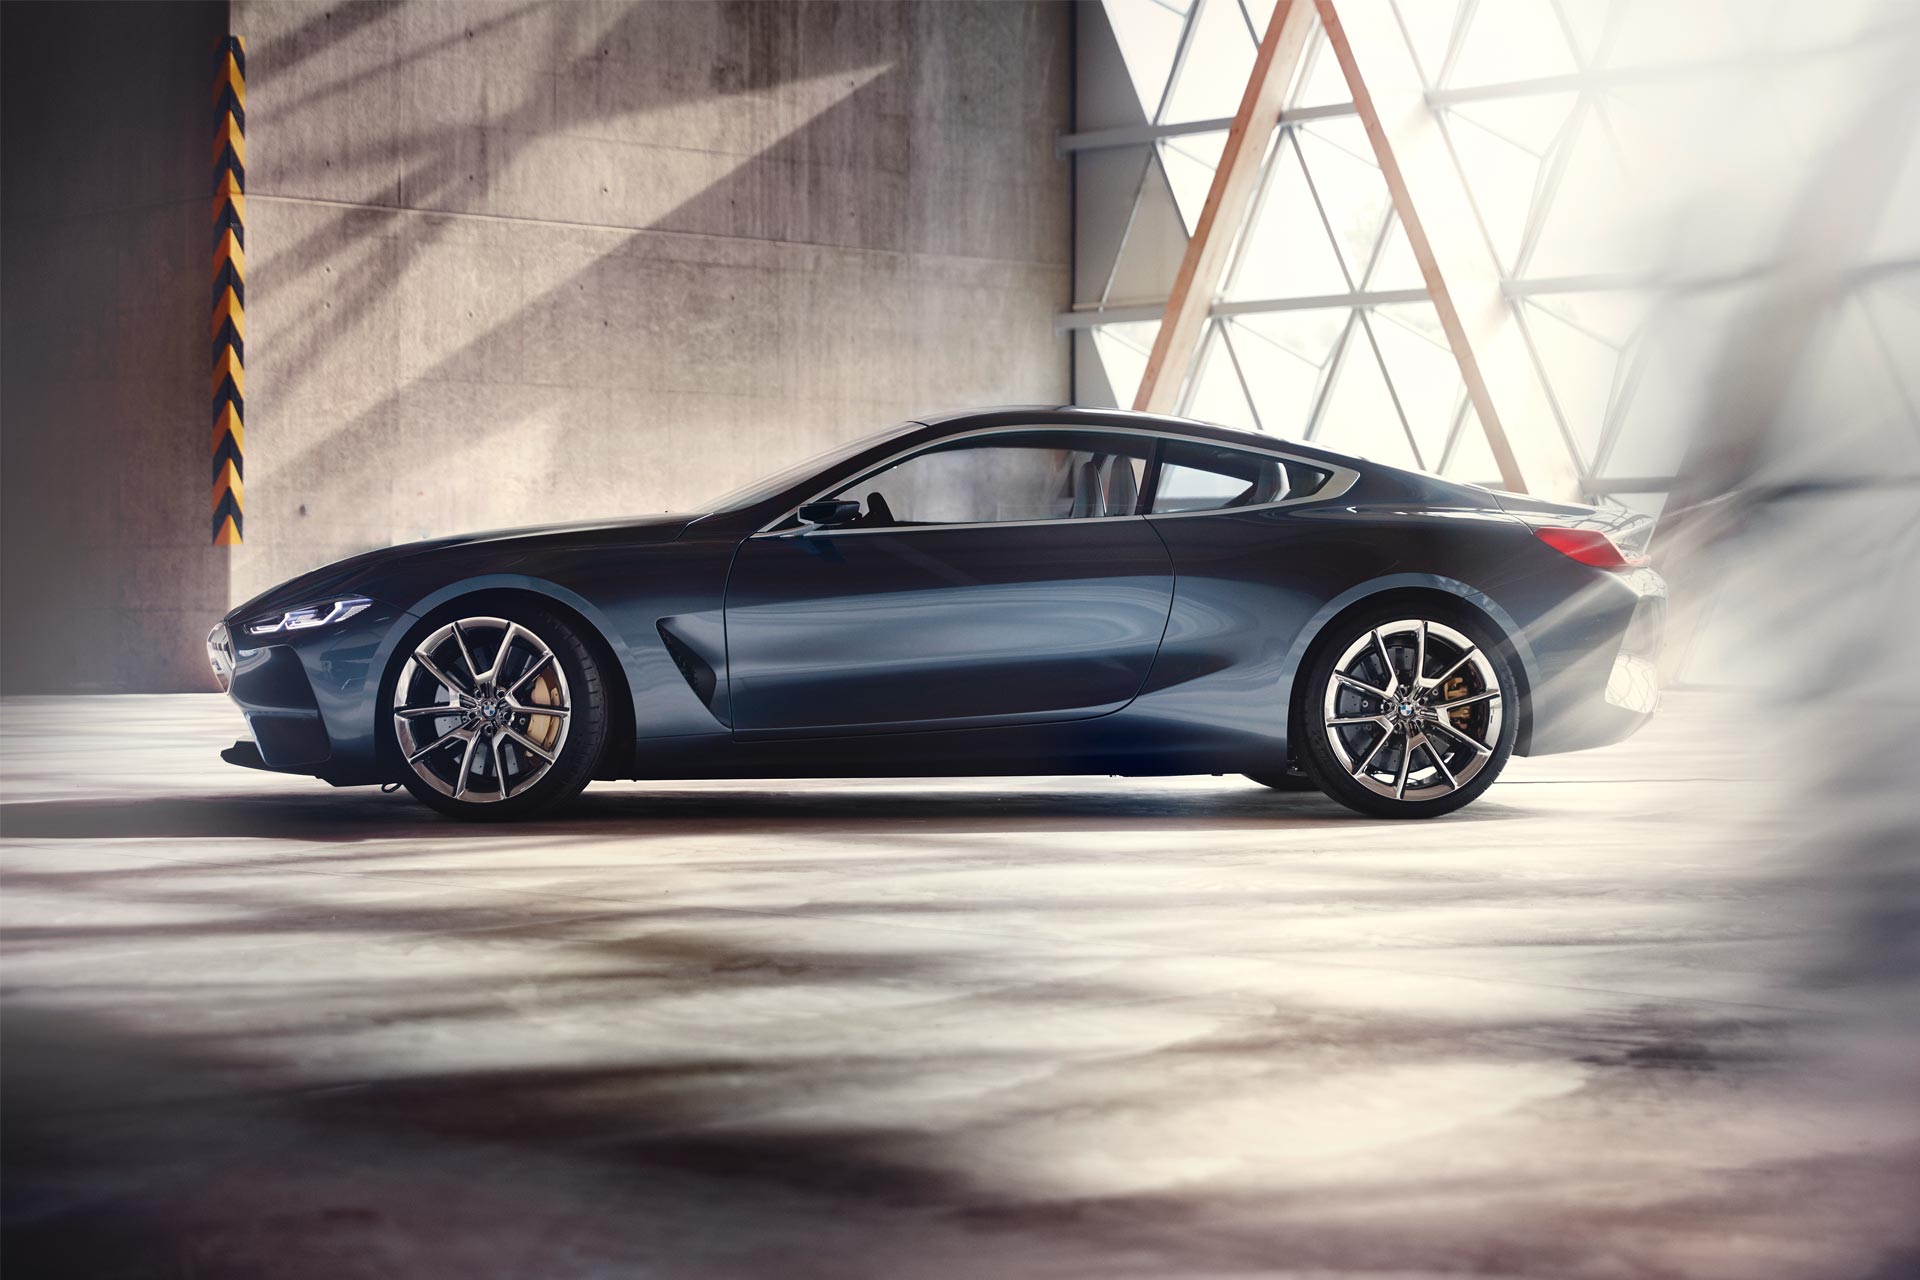 BMW-Concept-8-Series-9